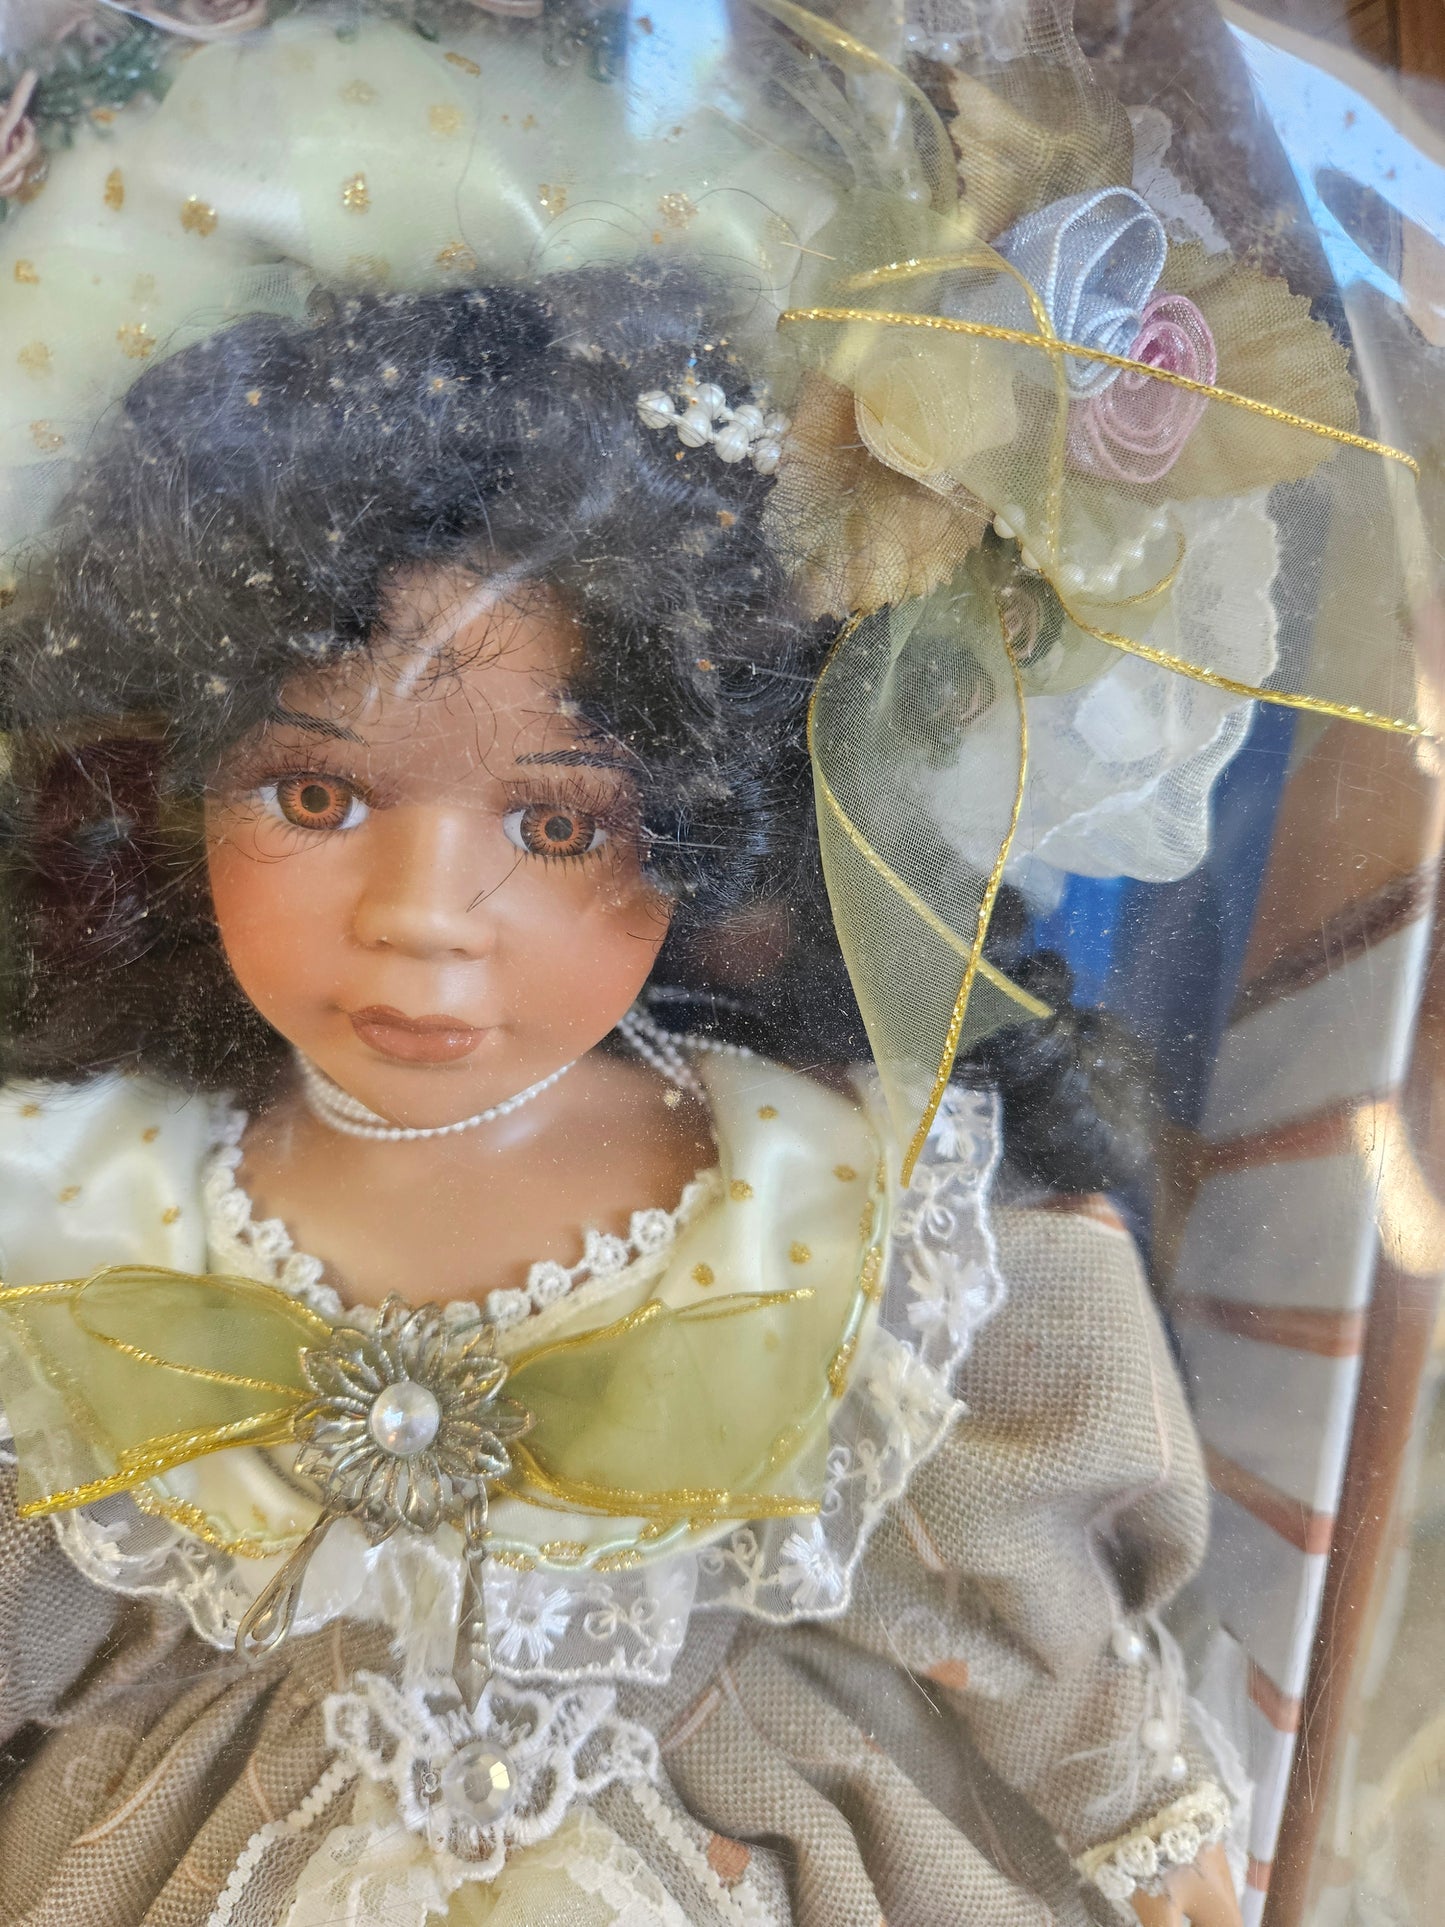 Collectors Choice Genuine Fine Bisque Porcelain Doll